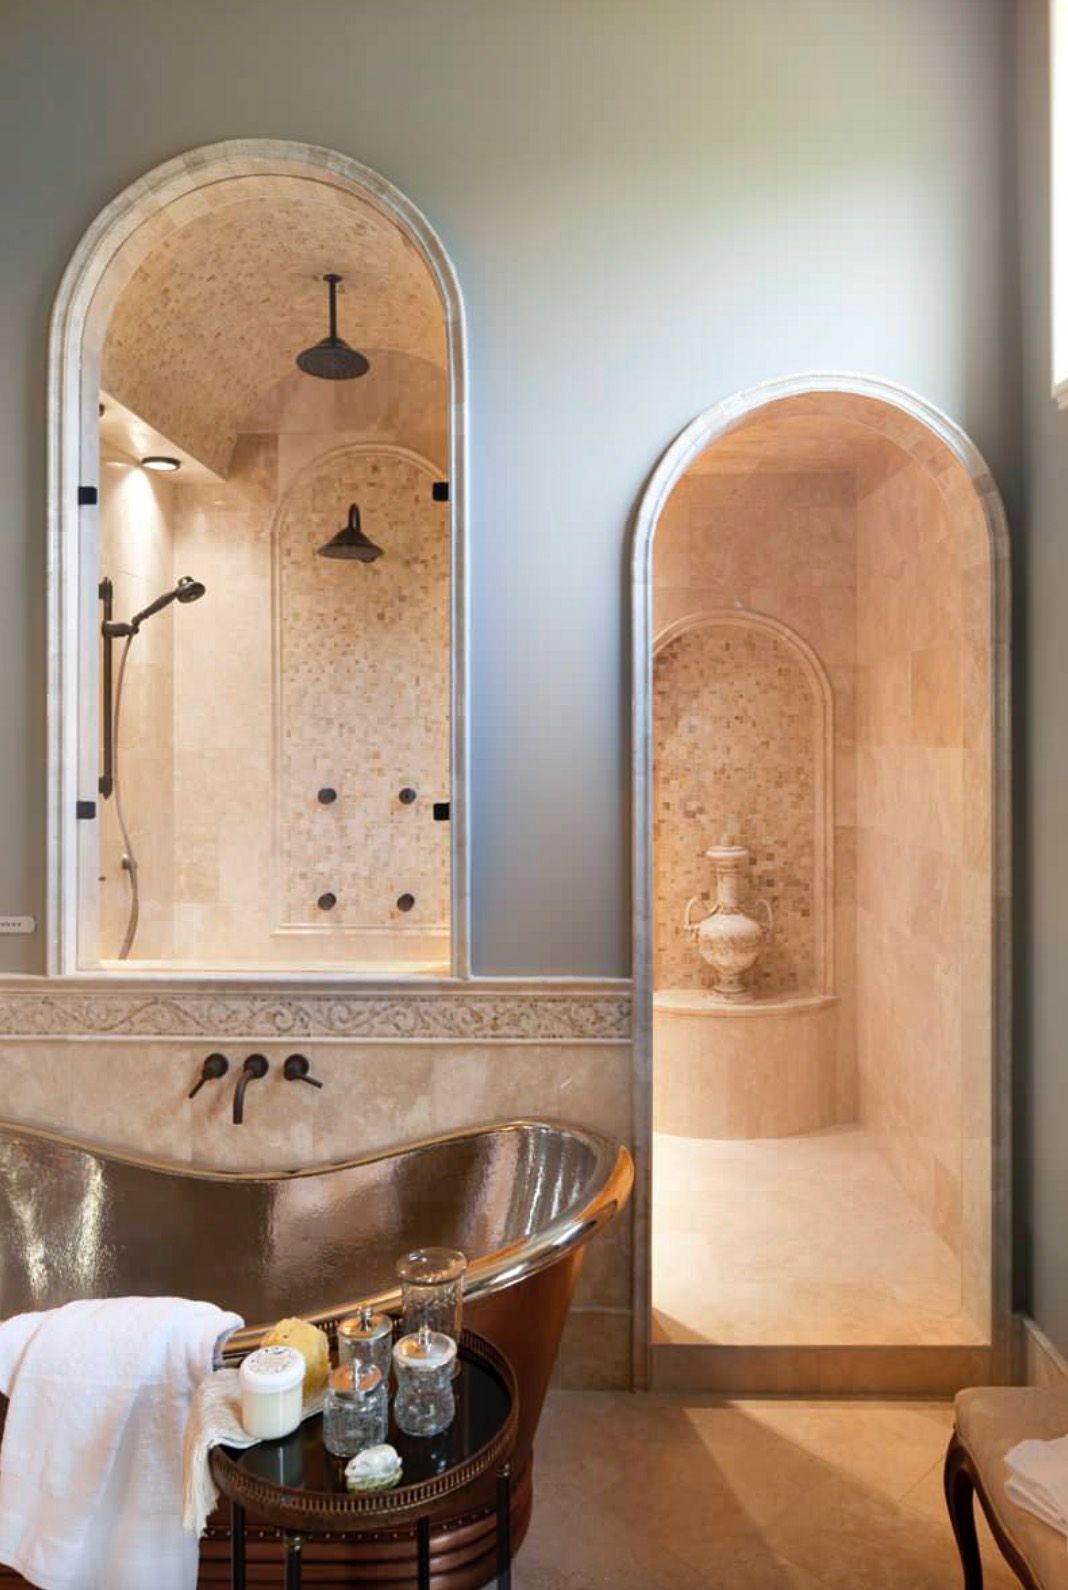 Top Tips For Creating A Zen Inspired Bathroom Retreat